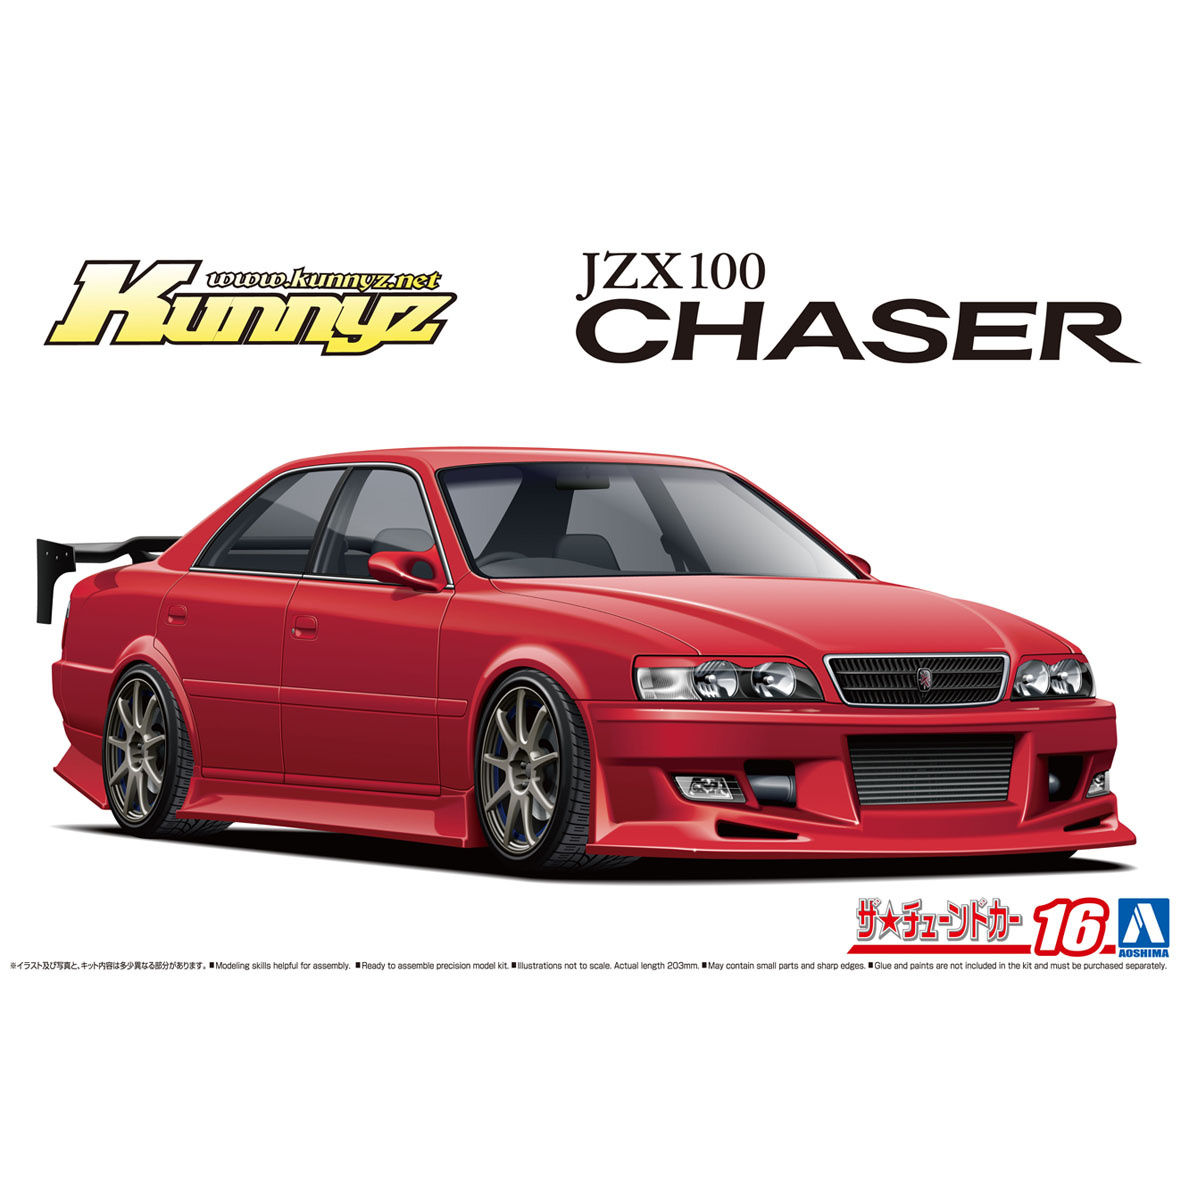 06310  автомобили и мотоциклы  Kunny'z JZX100 Chaser Tourer V '98  (1:24)